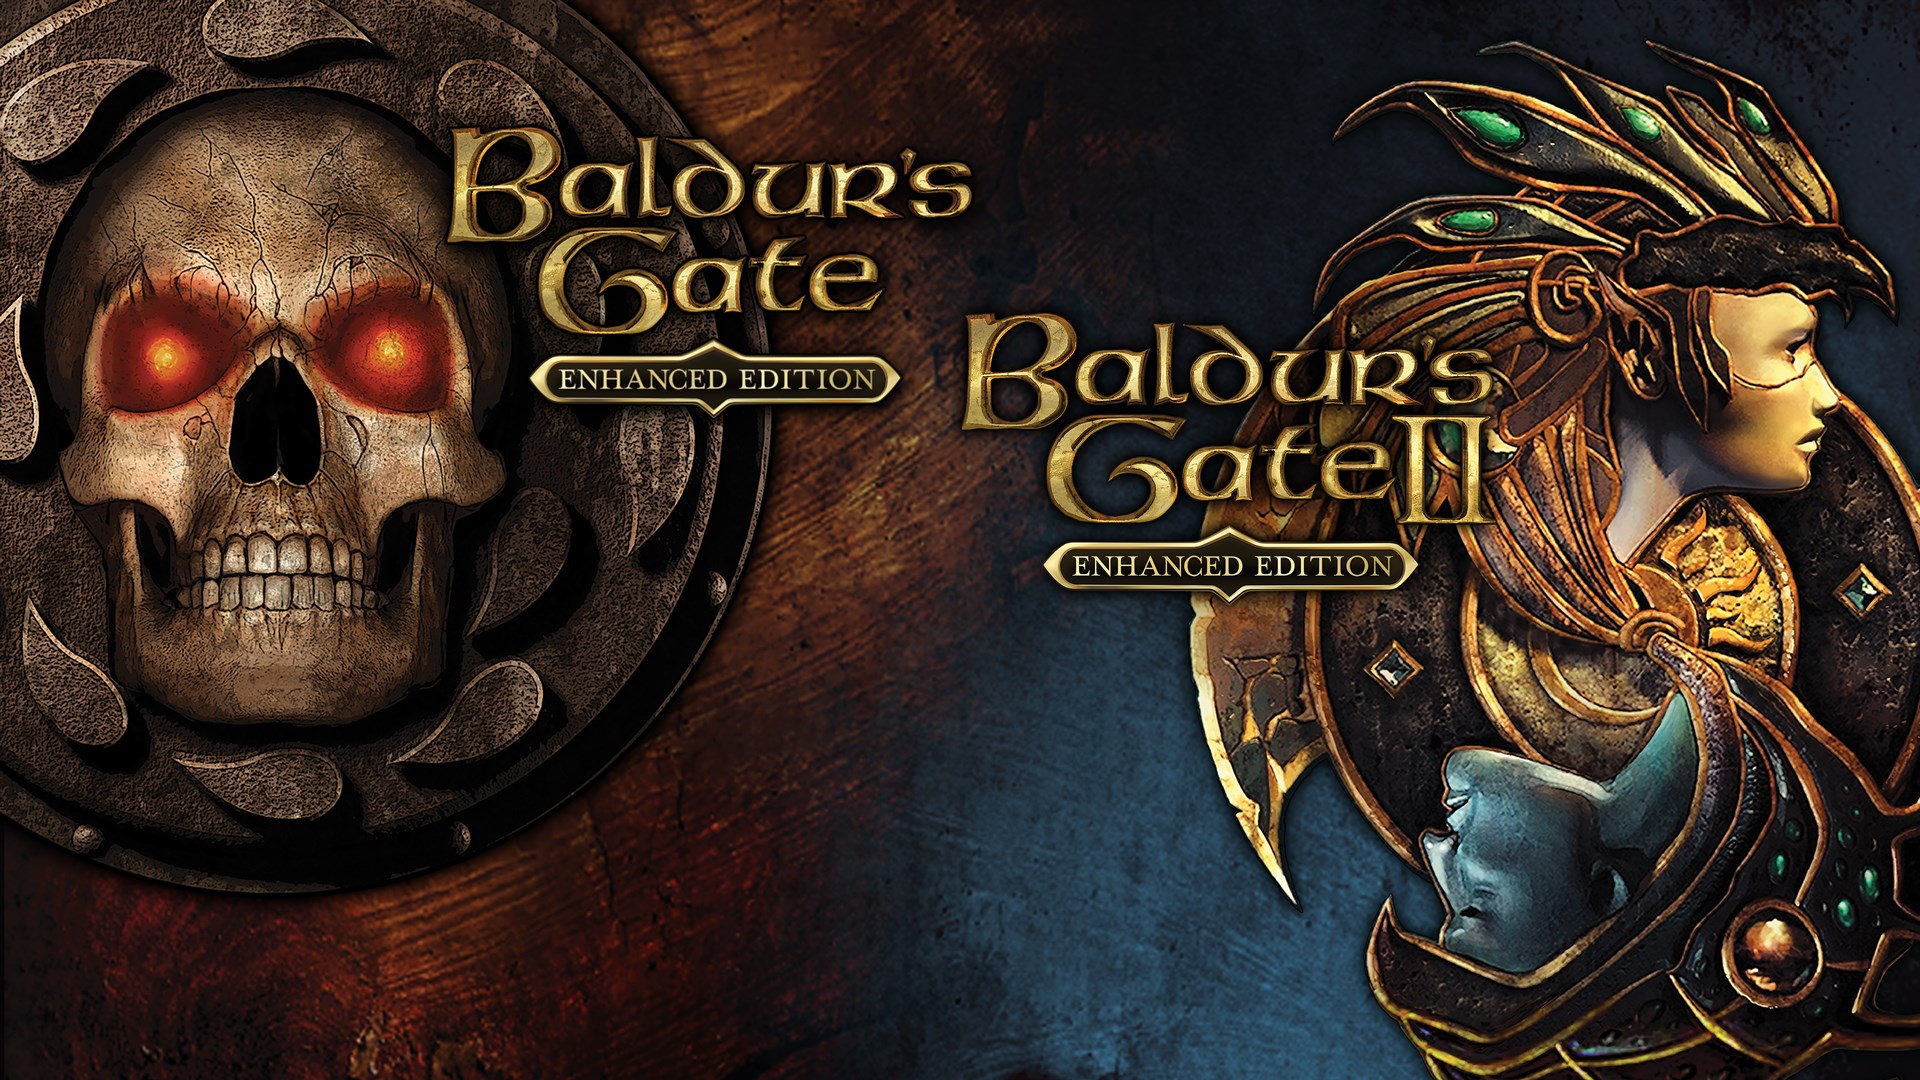 Baldurs Gate and Baldurs Gate II Enhanced Editions